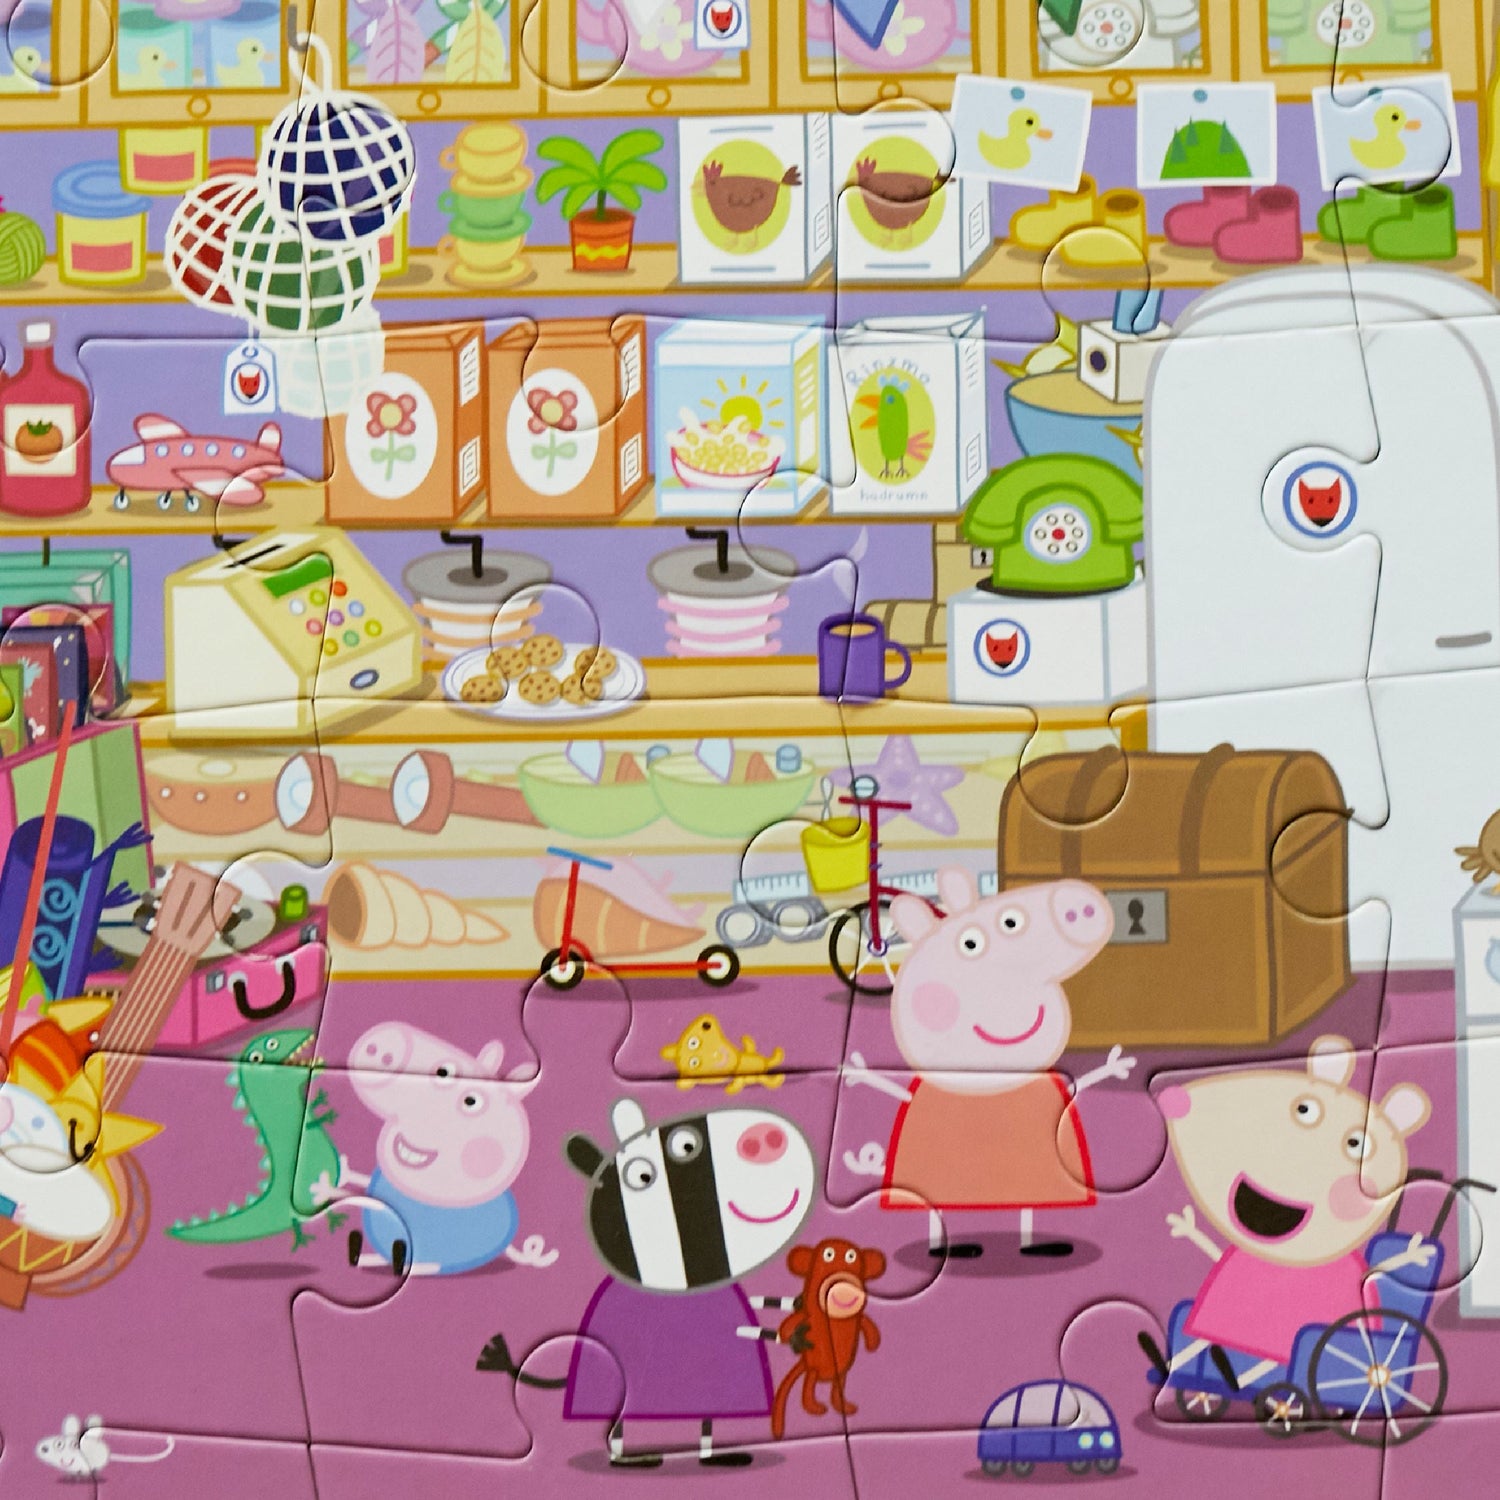 Look & Find Puzzle: Peppa Pig Mr. Fox's Shop - 36 Parçalı Yapboz ve Gözlem Oyunu moritoys 